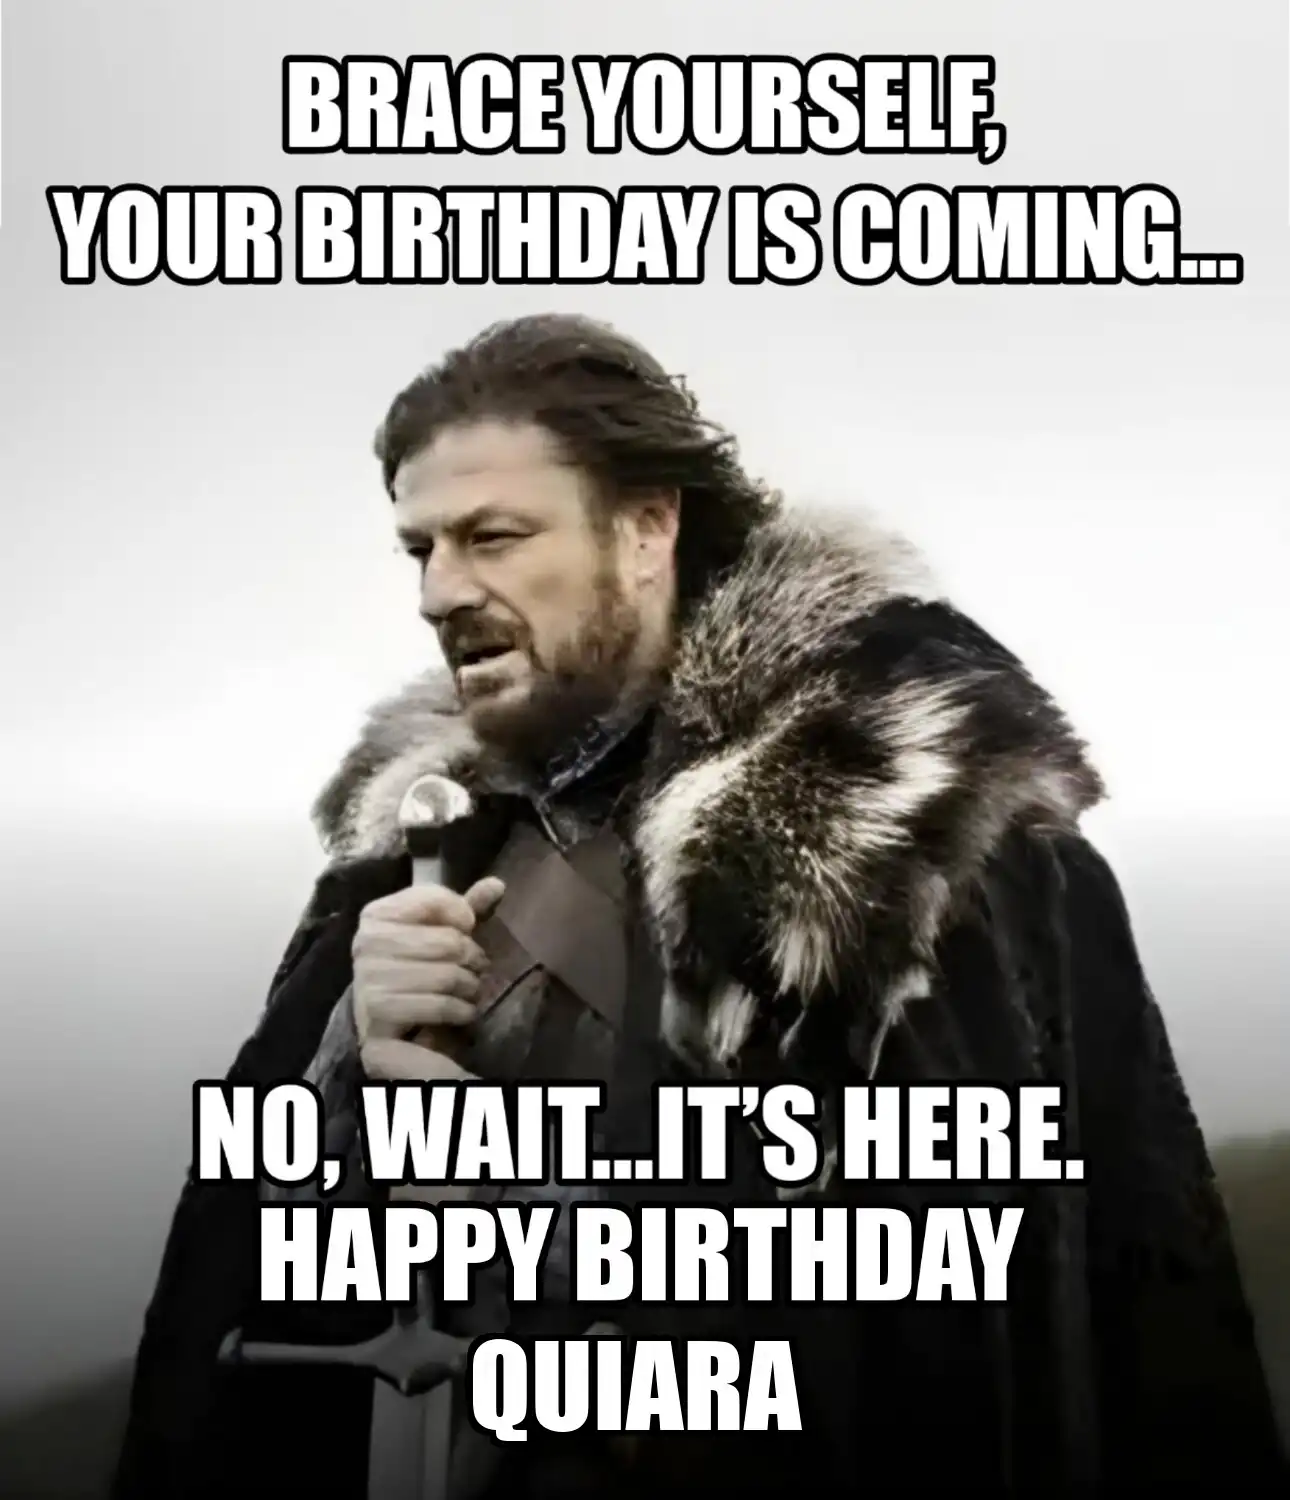 Happy Birthday Quiara Brace Yourself Your Birthday Is Coming Meme